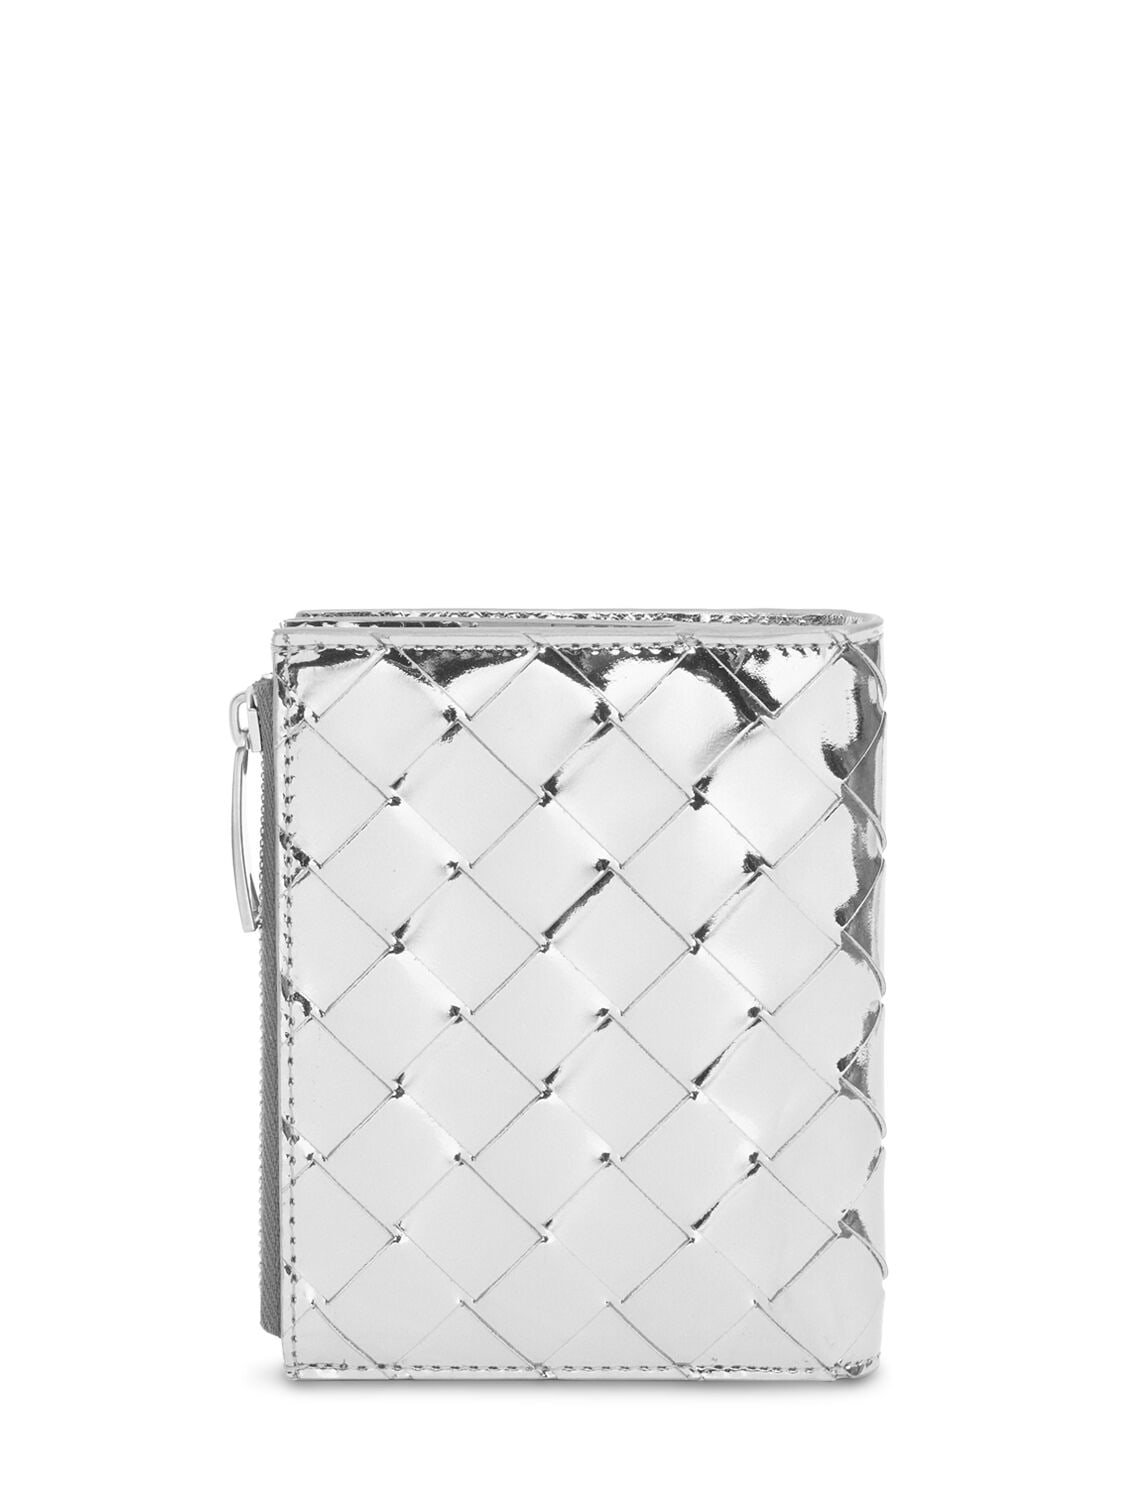 Bottega Veneta Small Intrecciato Leather Zip Wallet In Silver